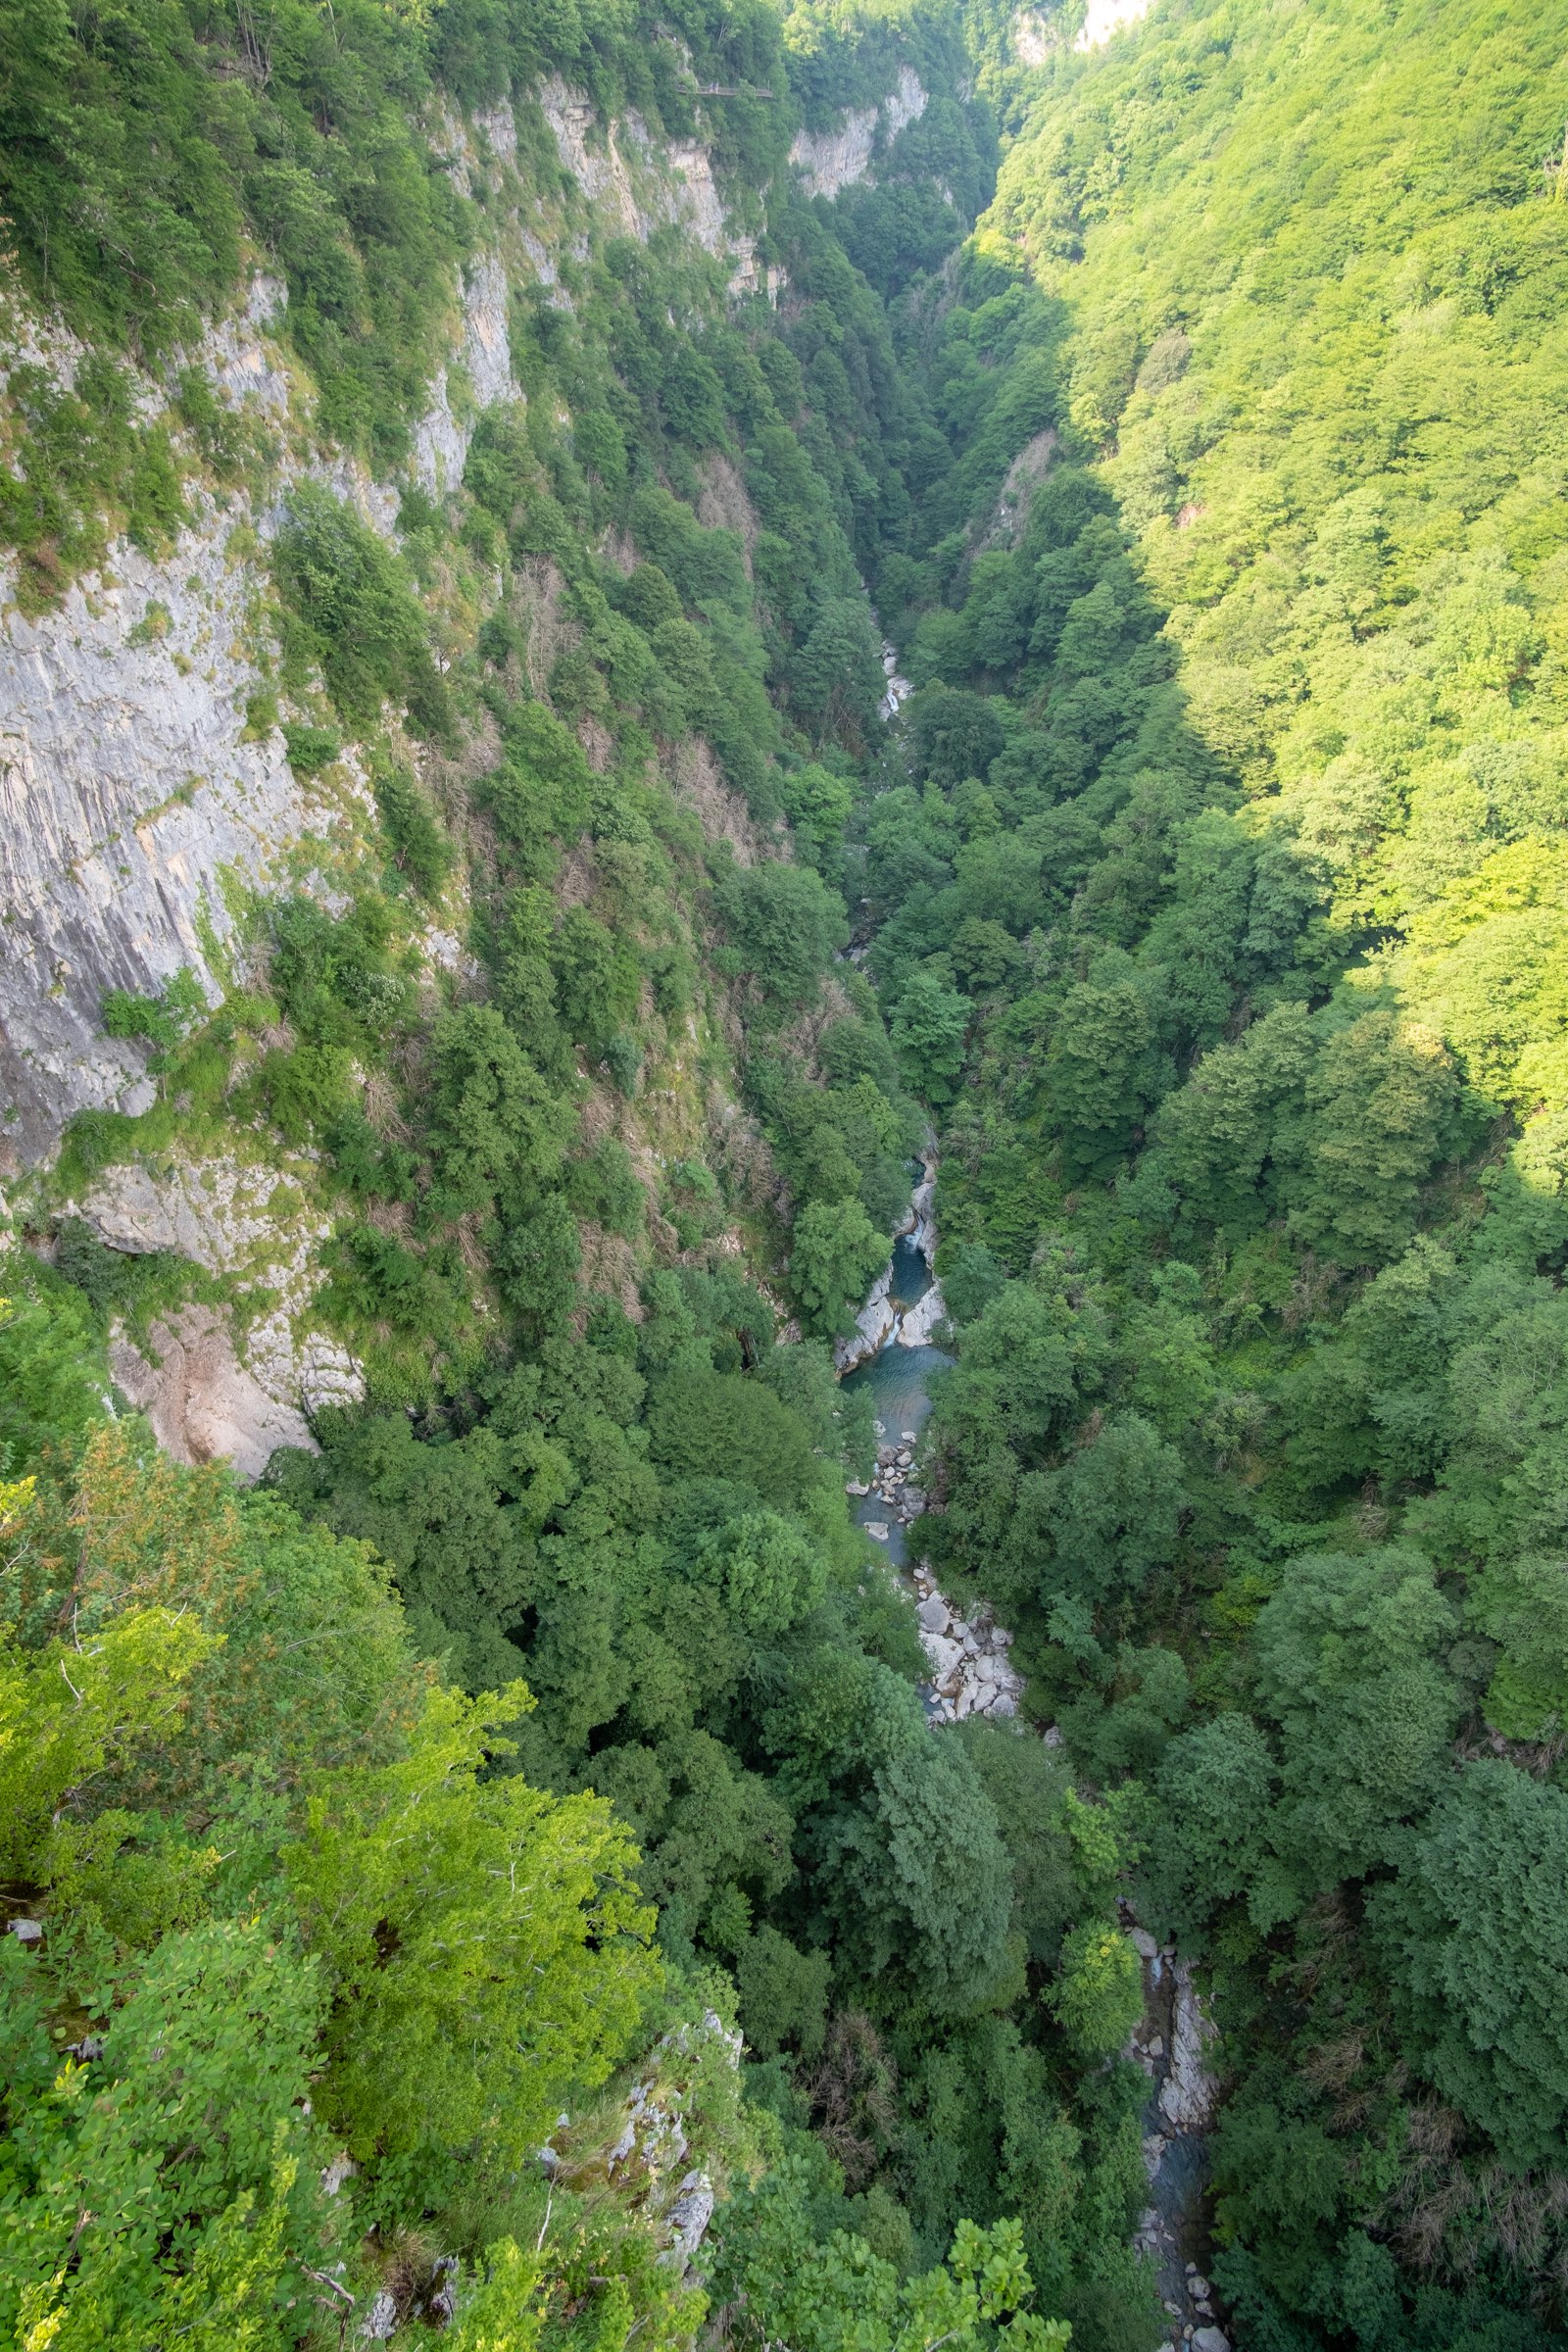 Okatse canyon from the viewing platform